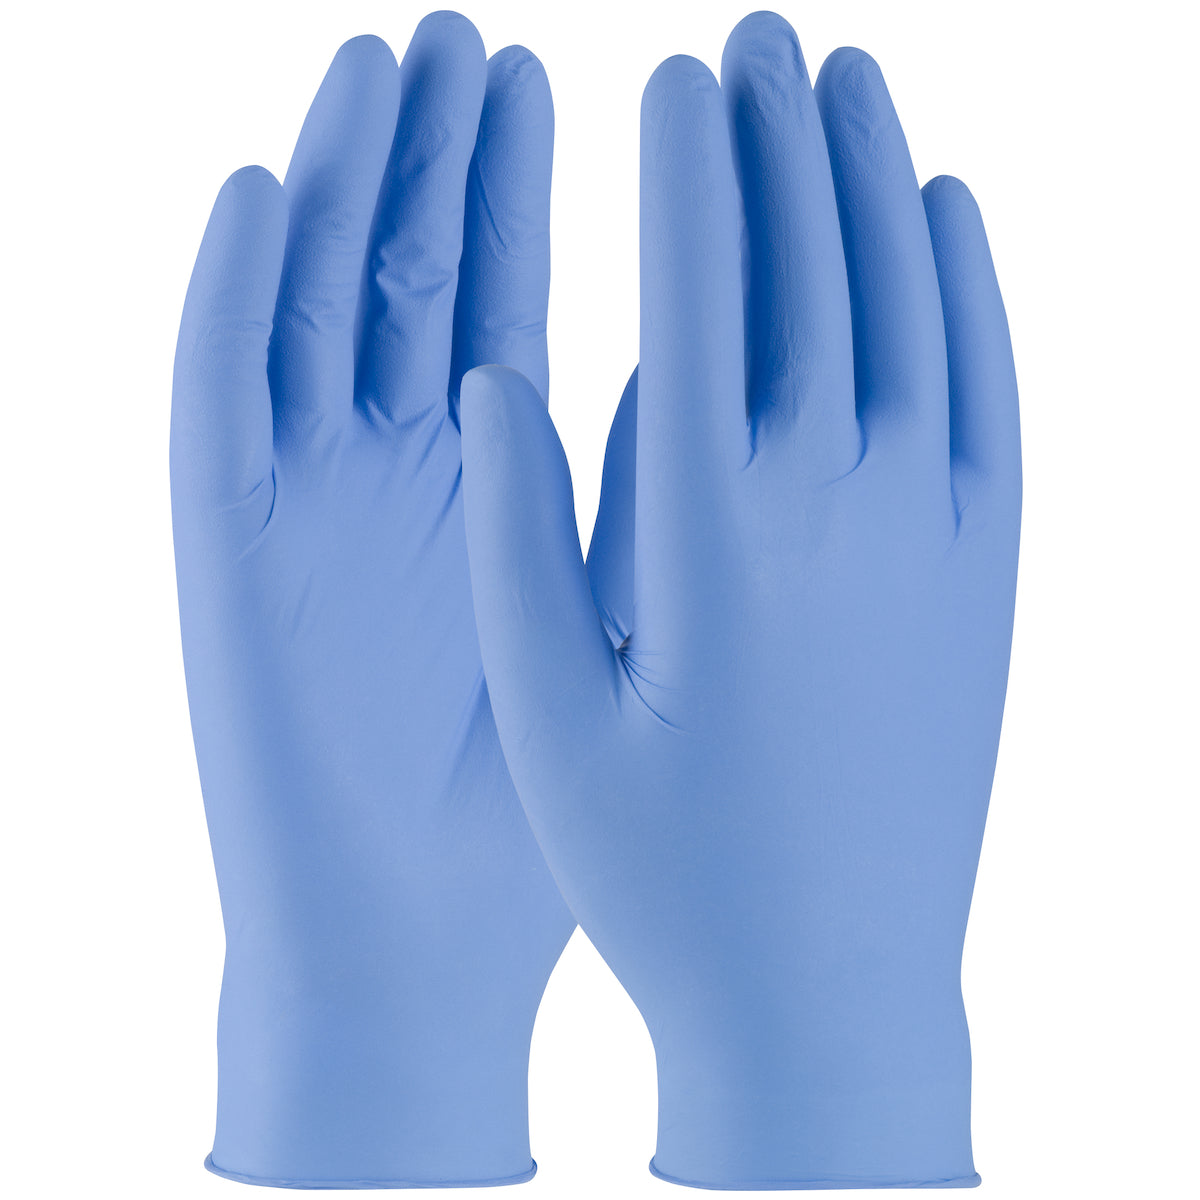 Ambi-dex 63-230PF/M Disposable Nitrile Glove, Powder Free with Textured Grip - 3 mil